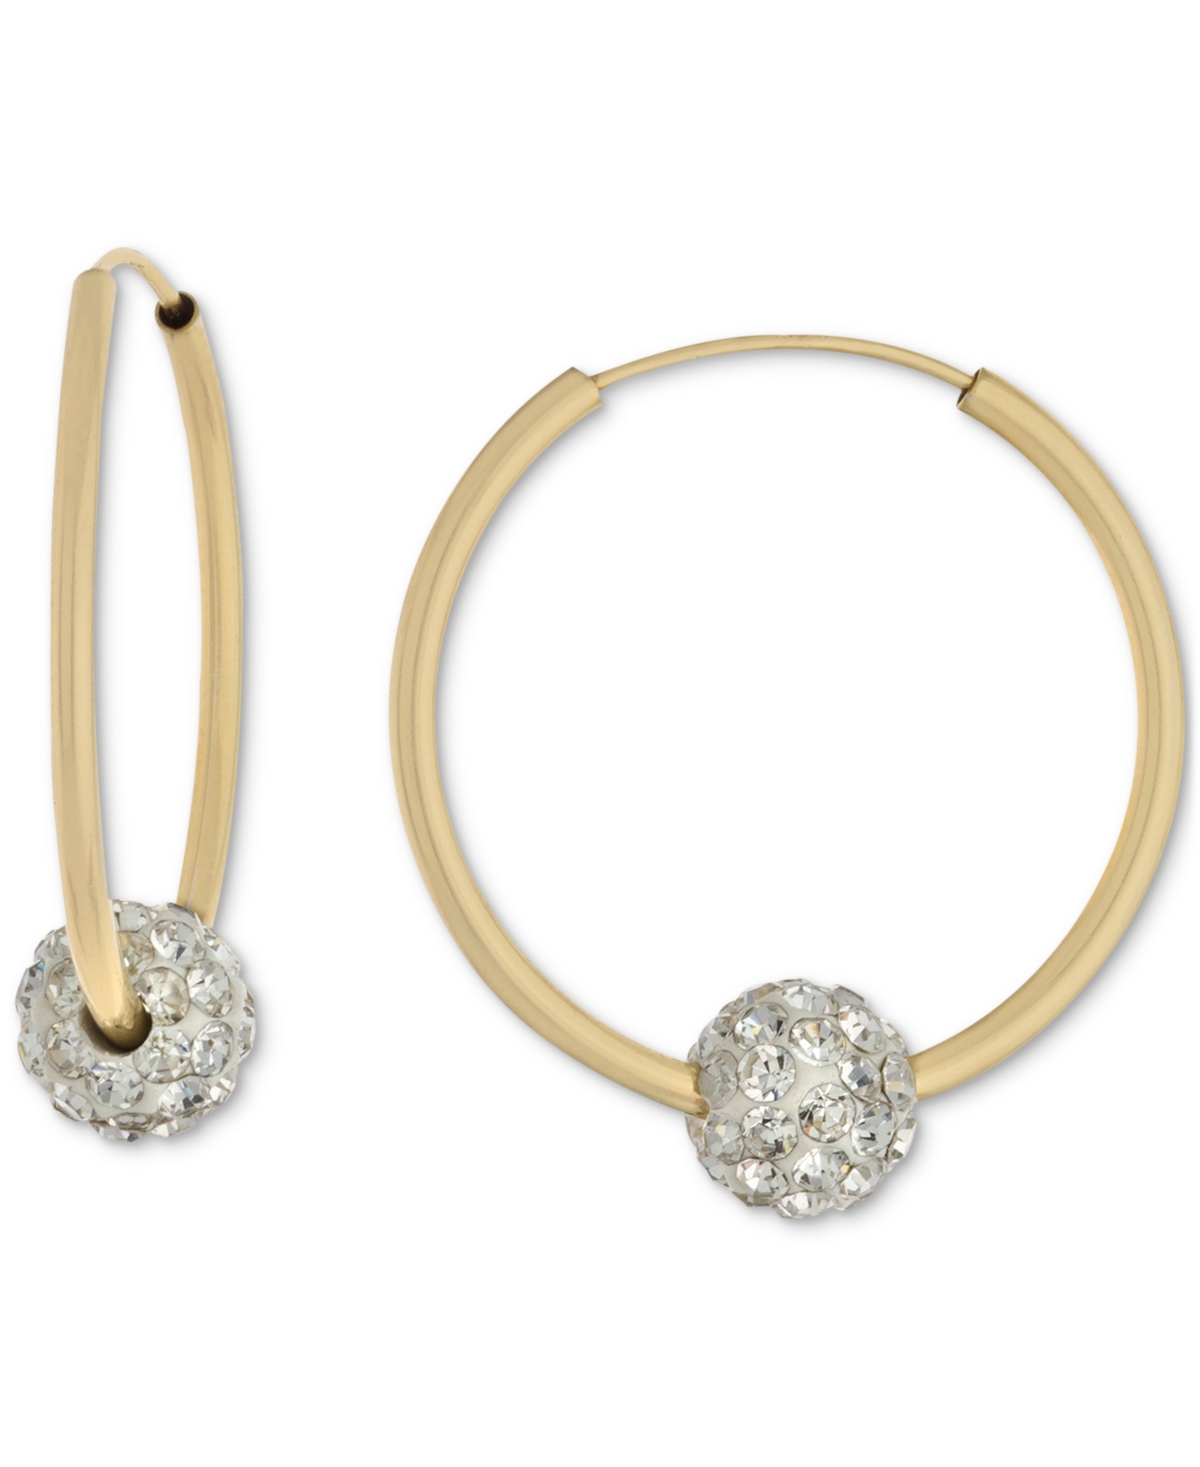 Crystal Ball Small Hoop Earrings, 0.82", Created for Macy's - Blue